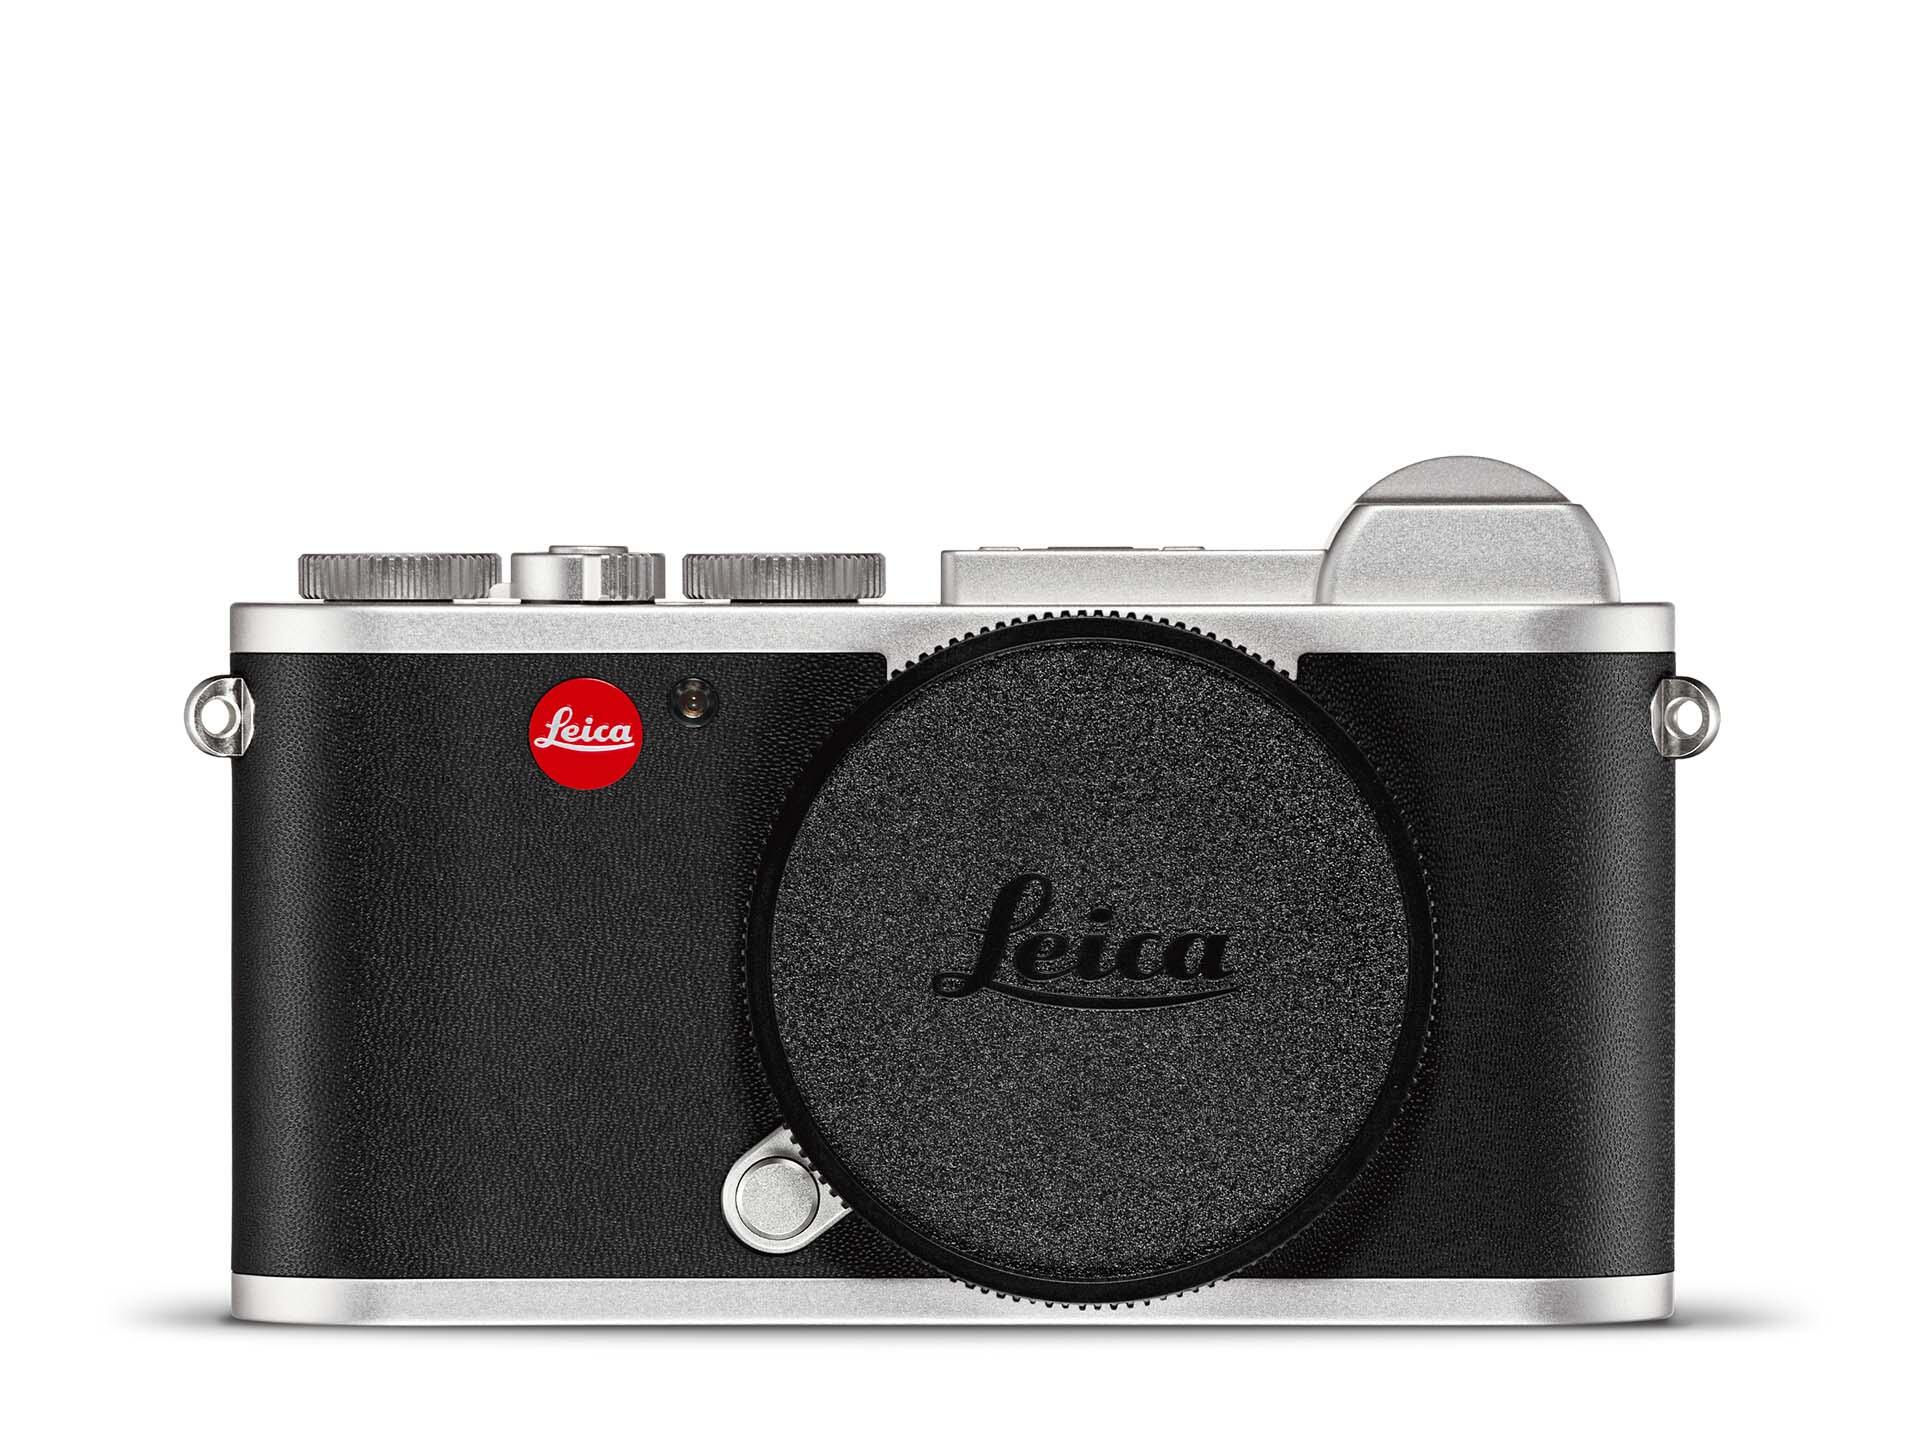 Leica CL   概要   Leica Camera JP